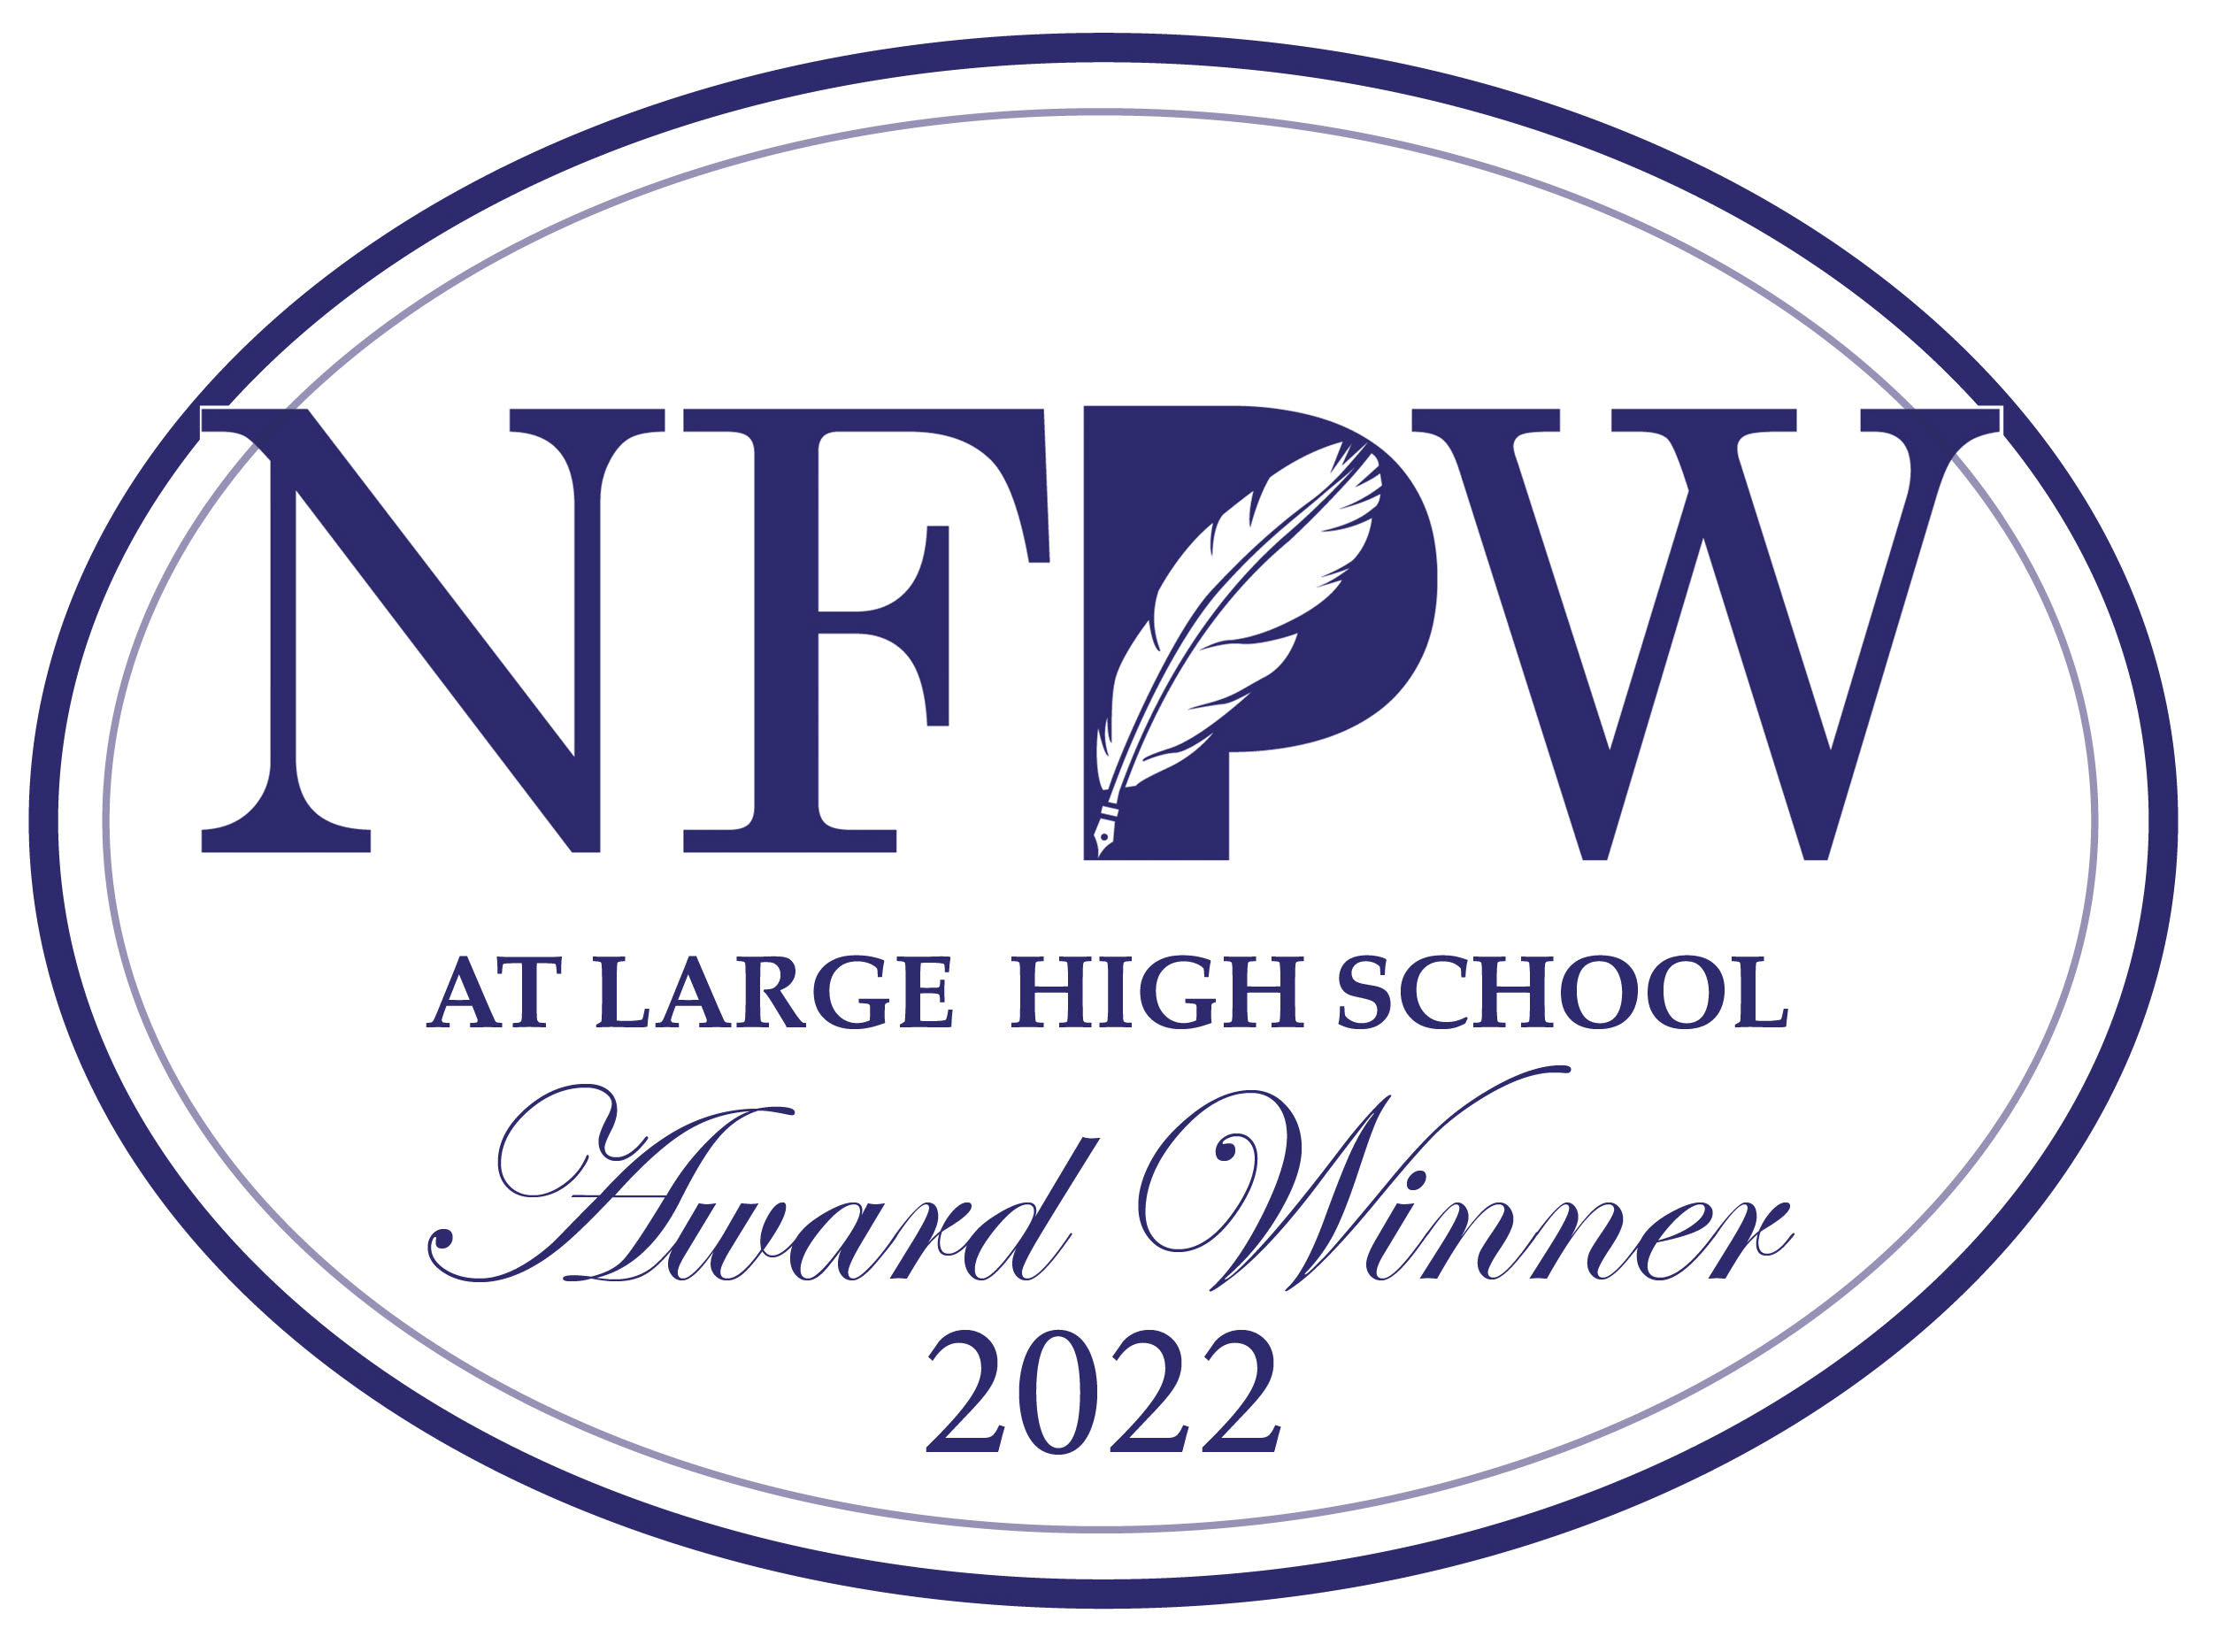 NFPW At Large High School Award Winner 2022